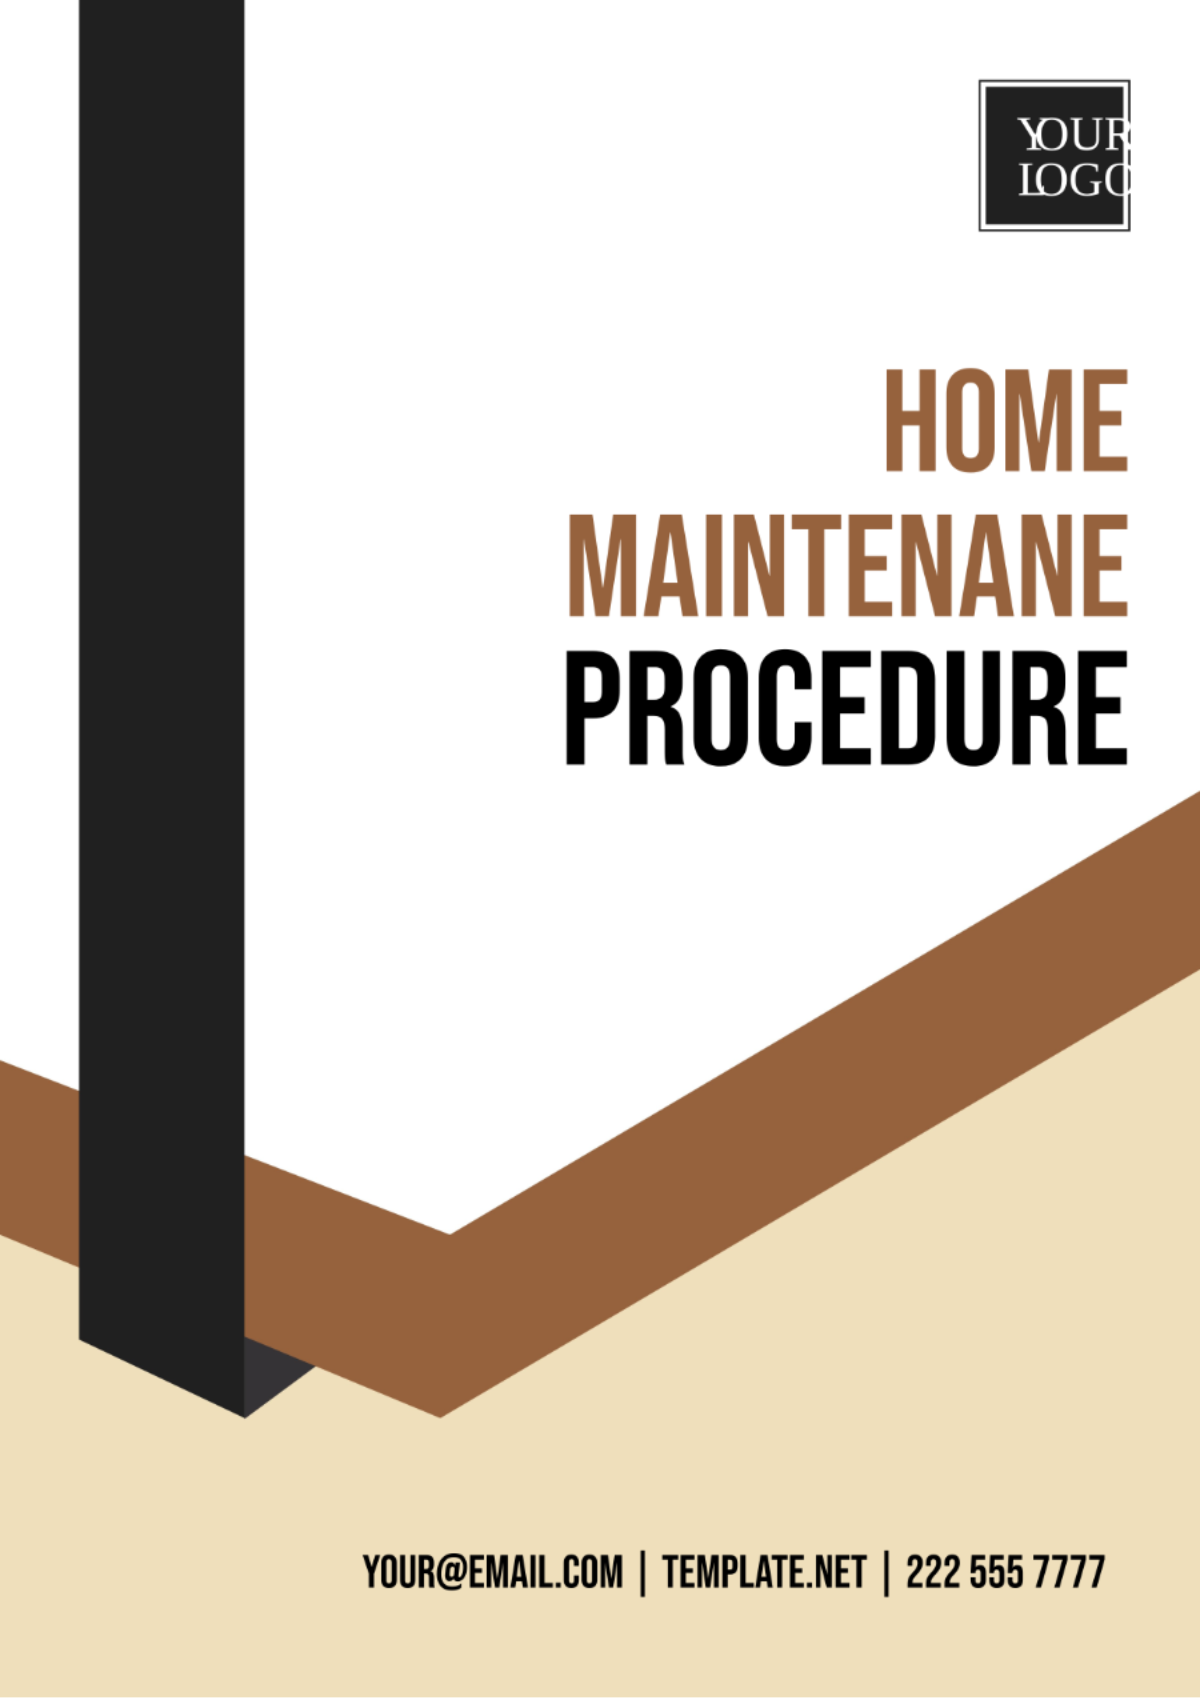 Home Maintenance Procedure Template